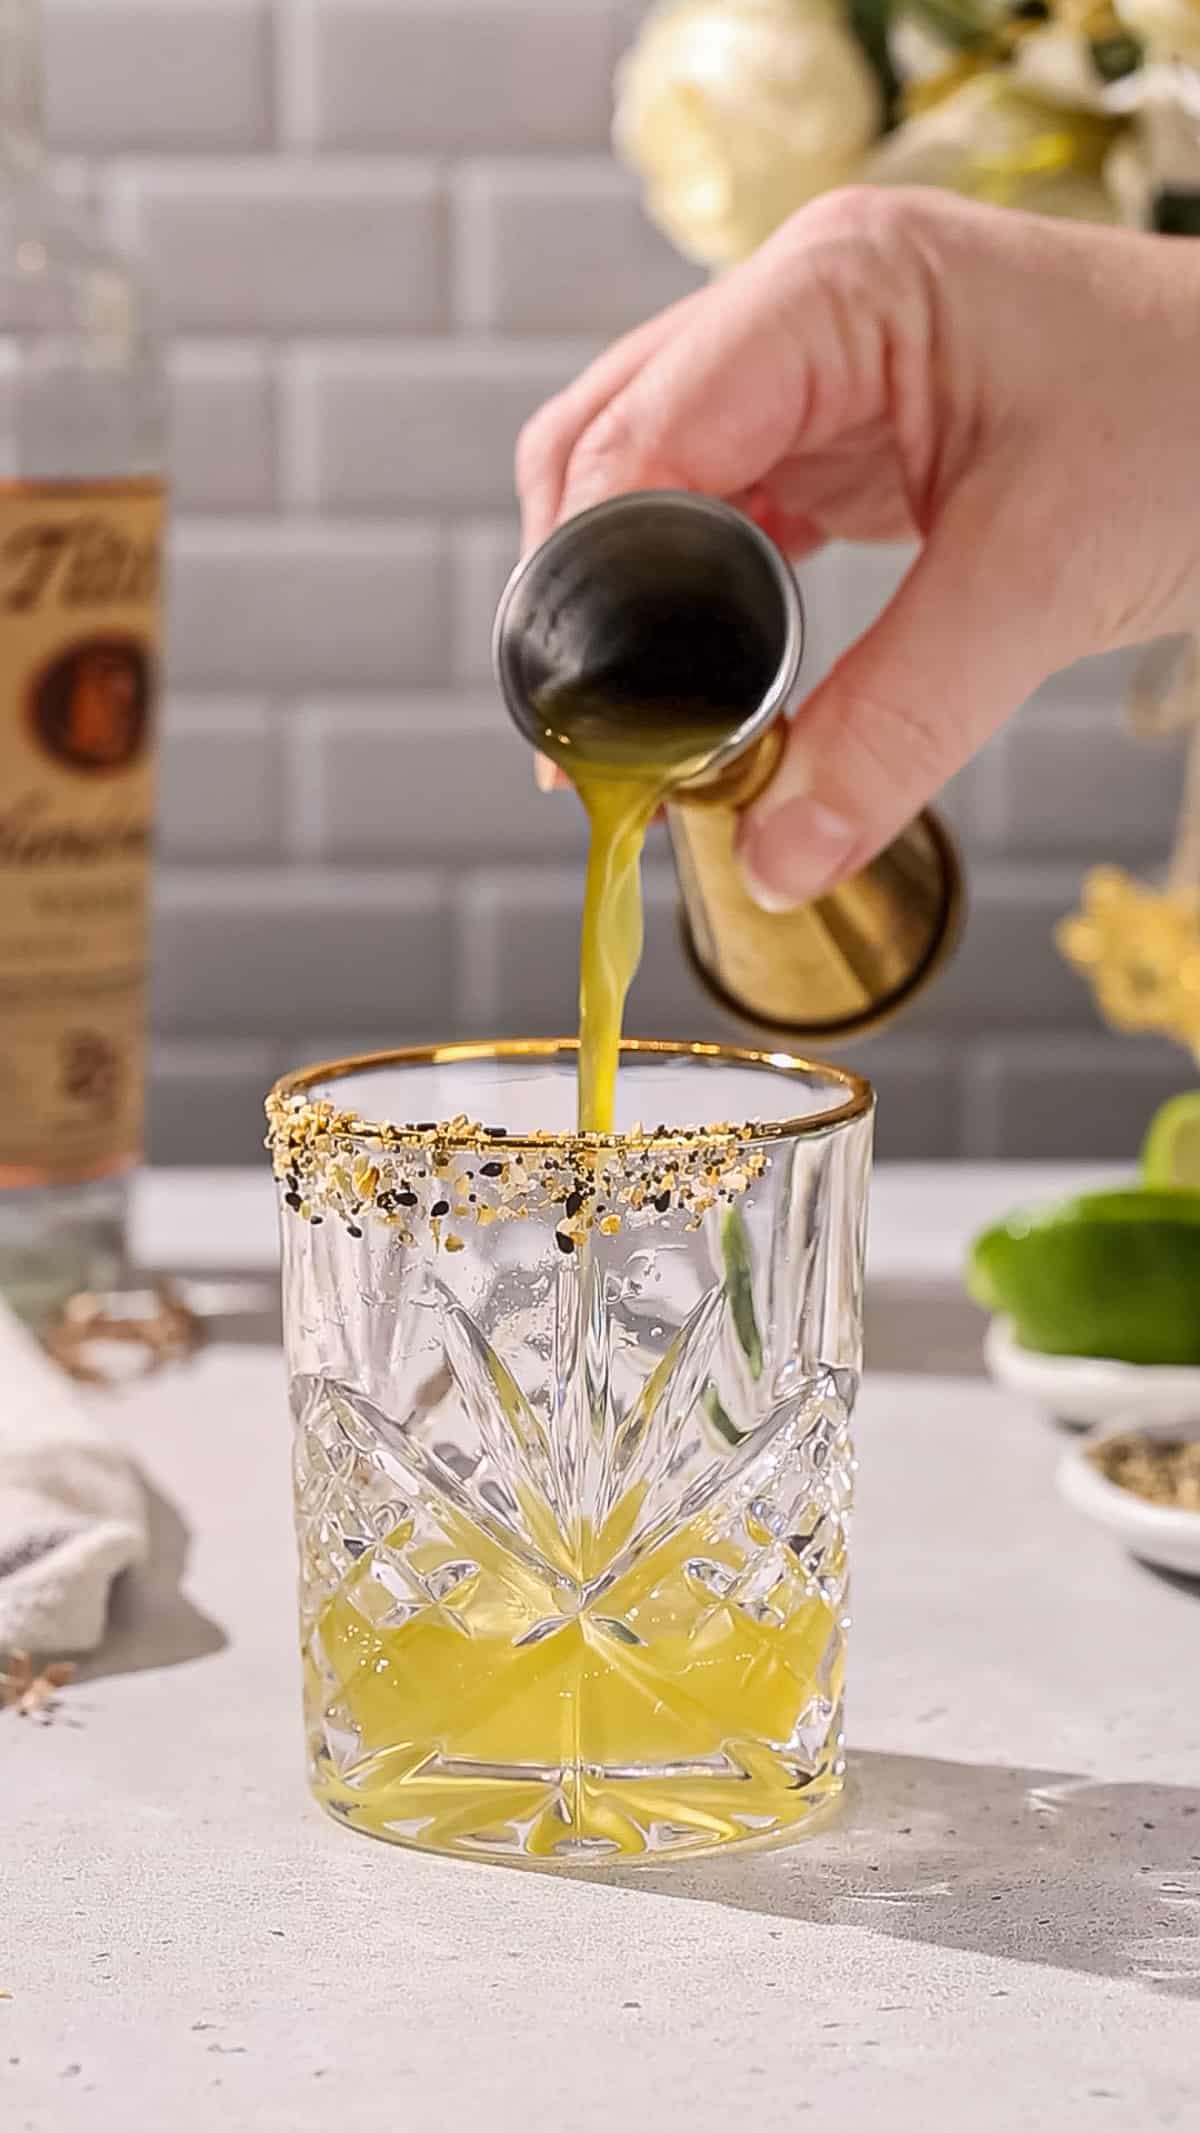 Hand adding a green shrub liquid to a cocktail glass.